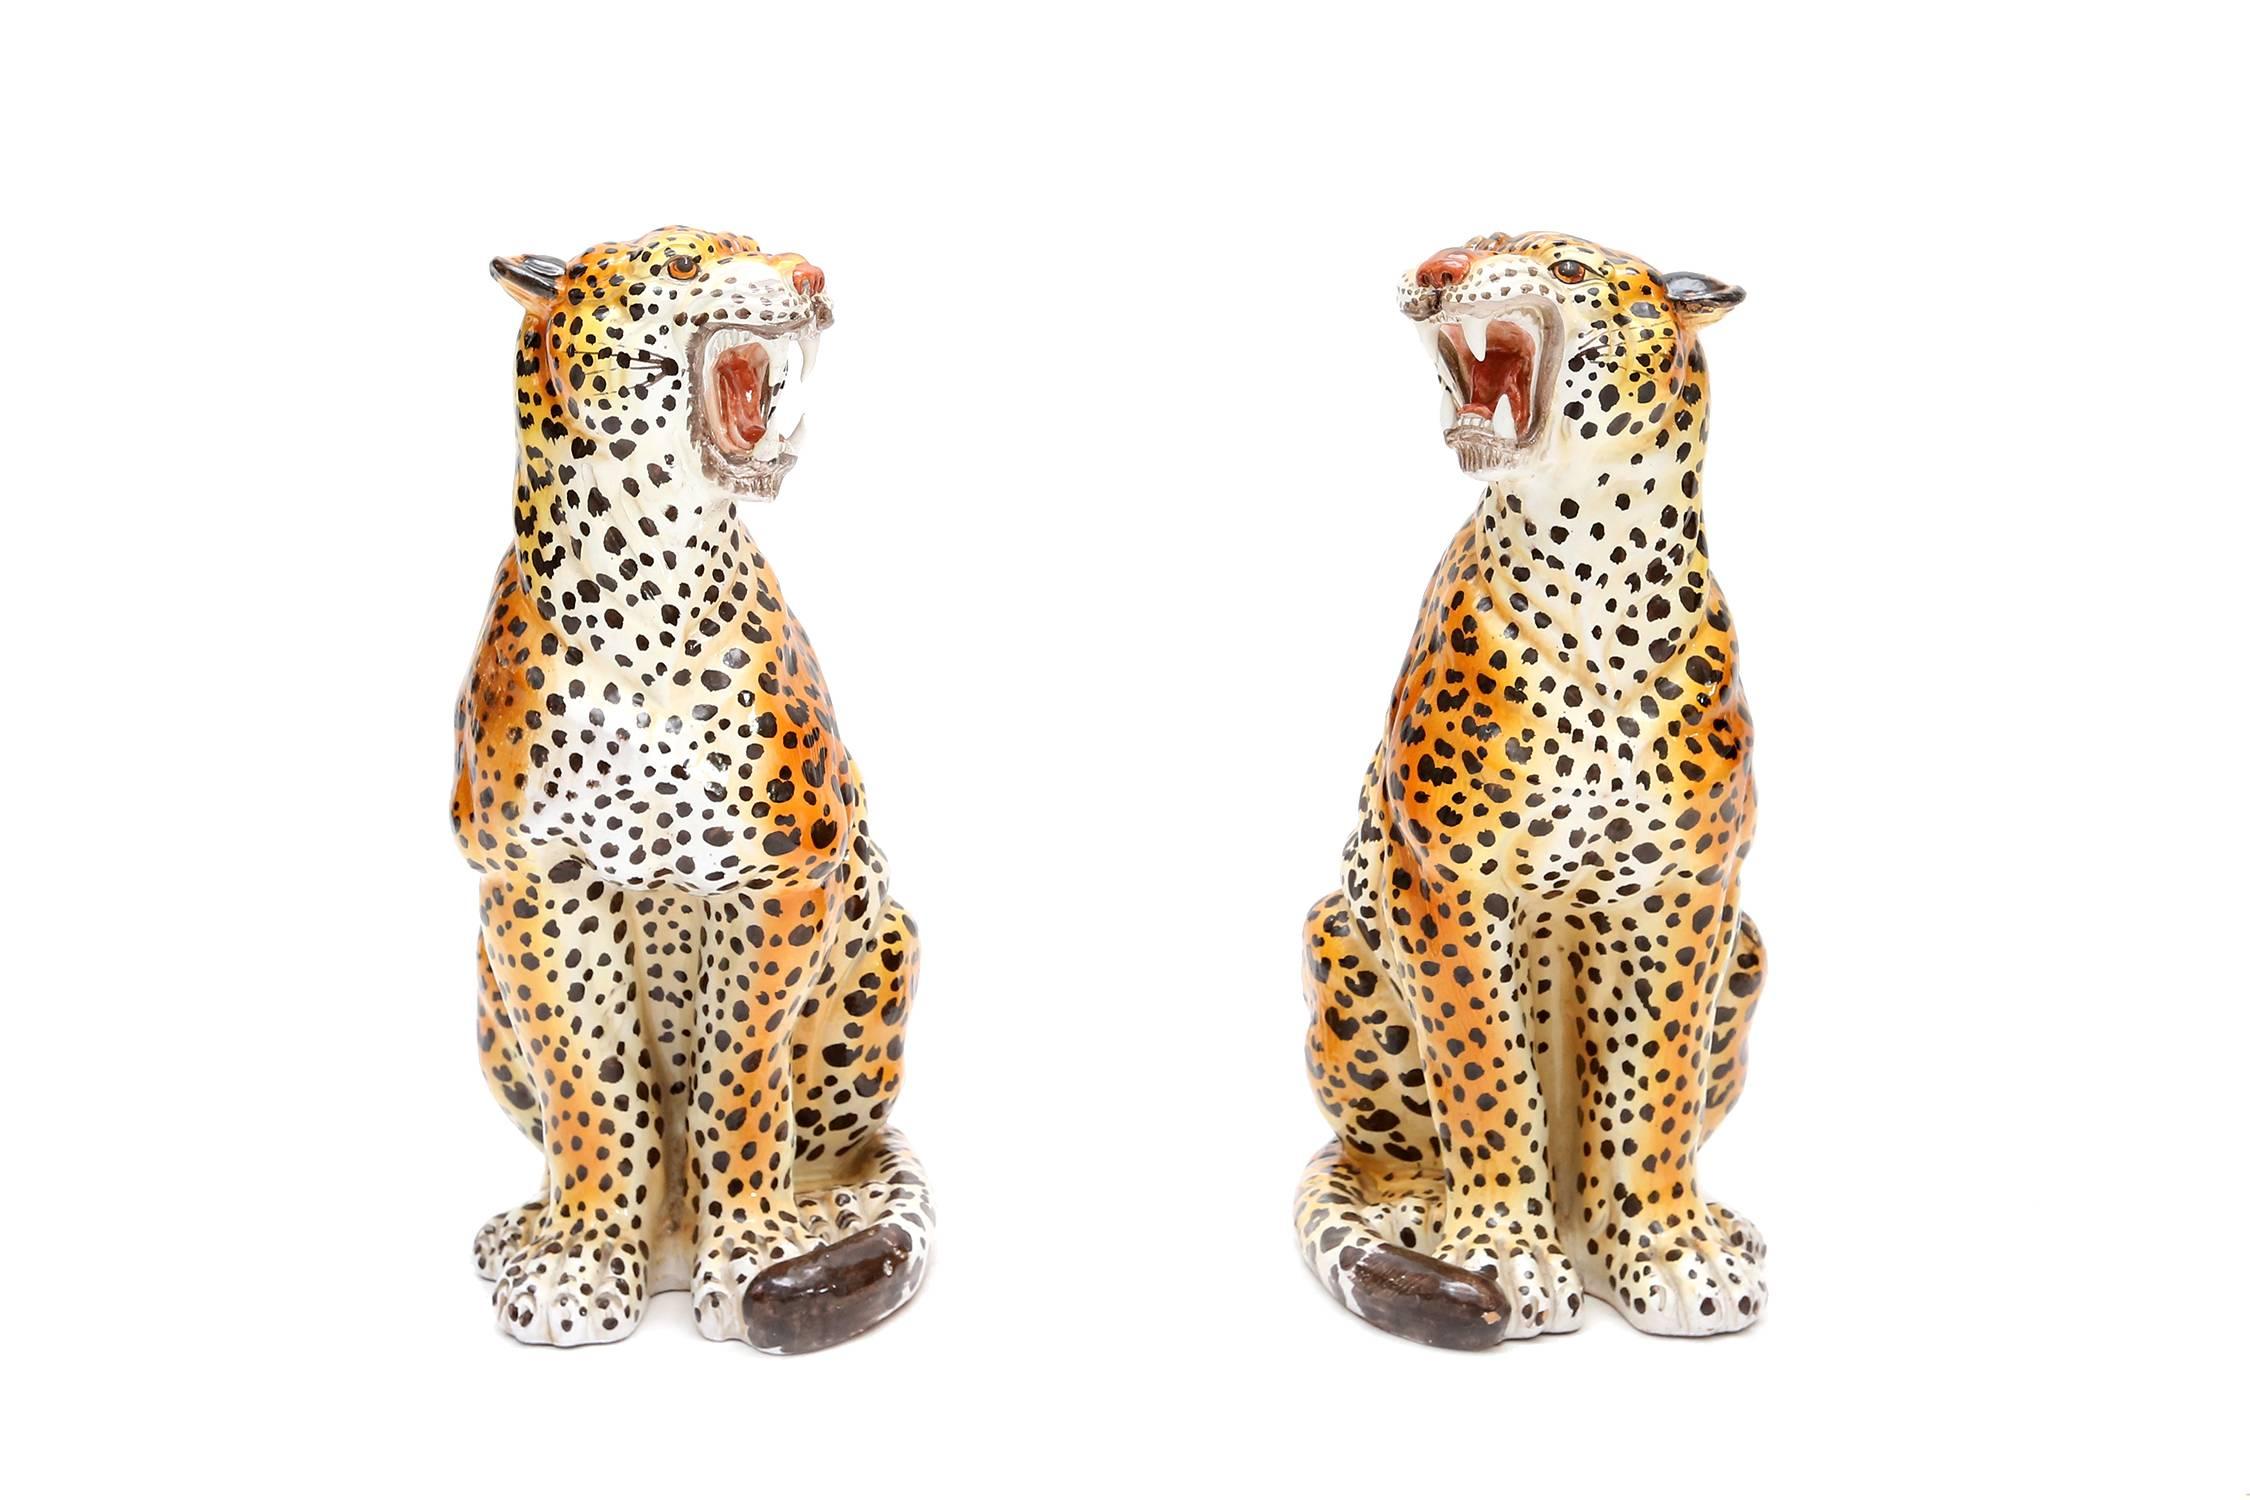 Hollywood Regency Pair of Sitting Leopard Sculptures